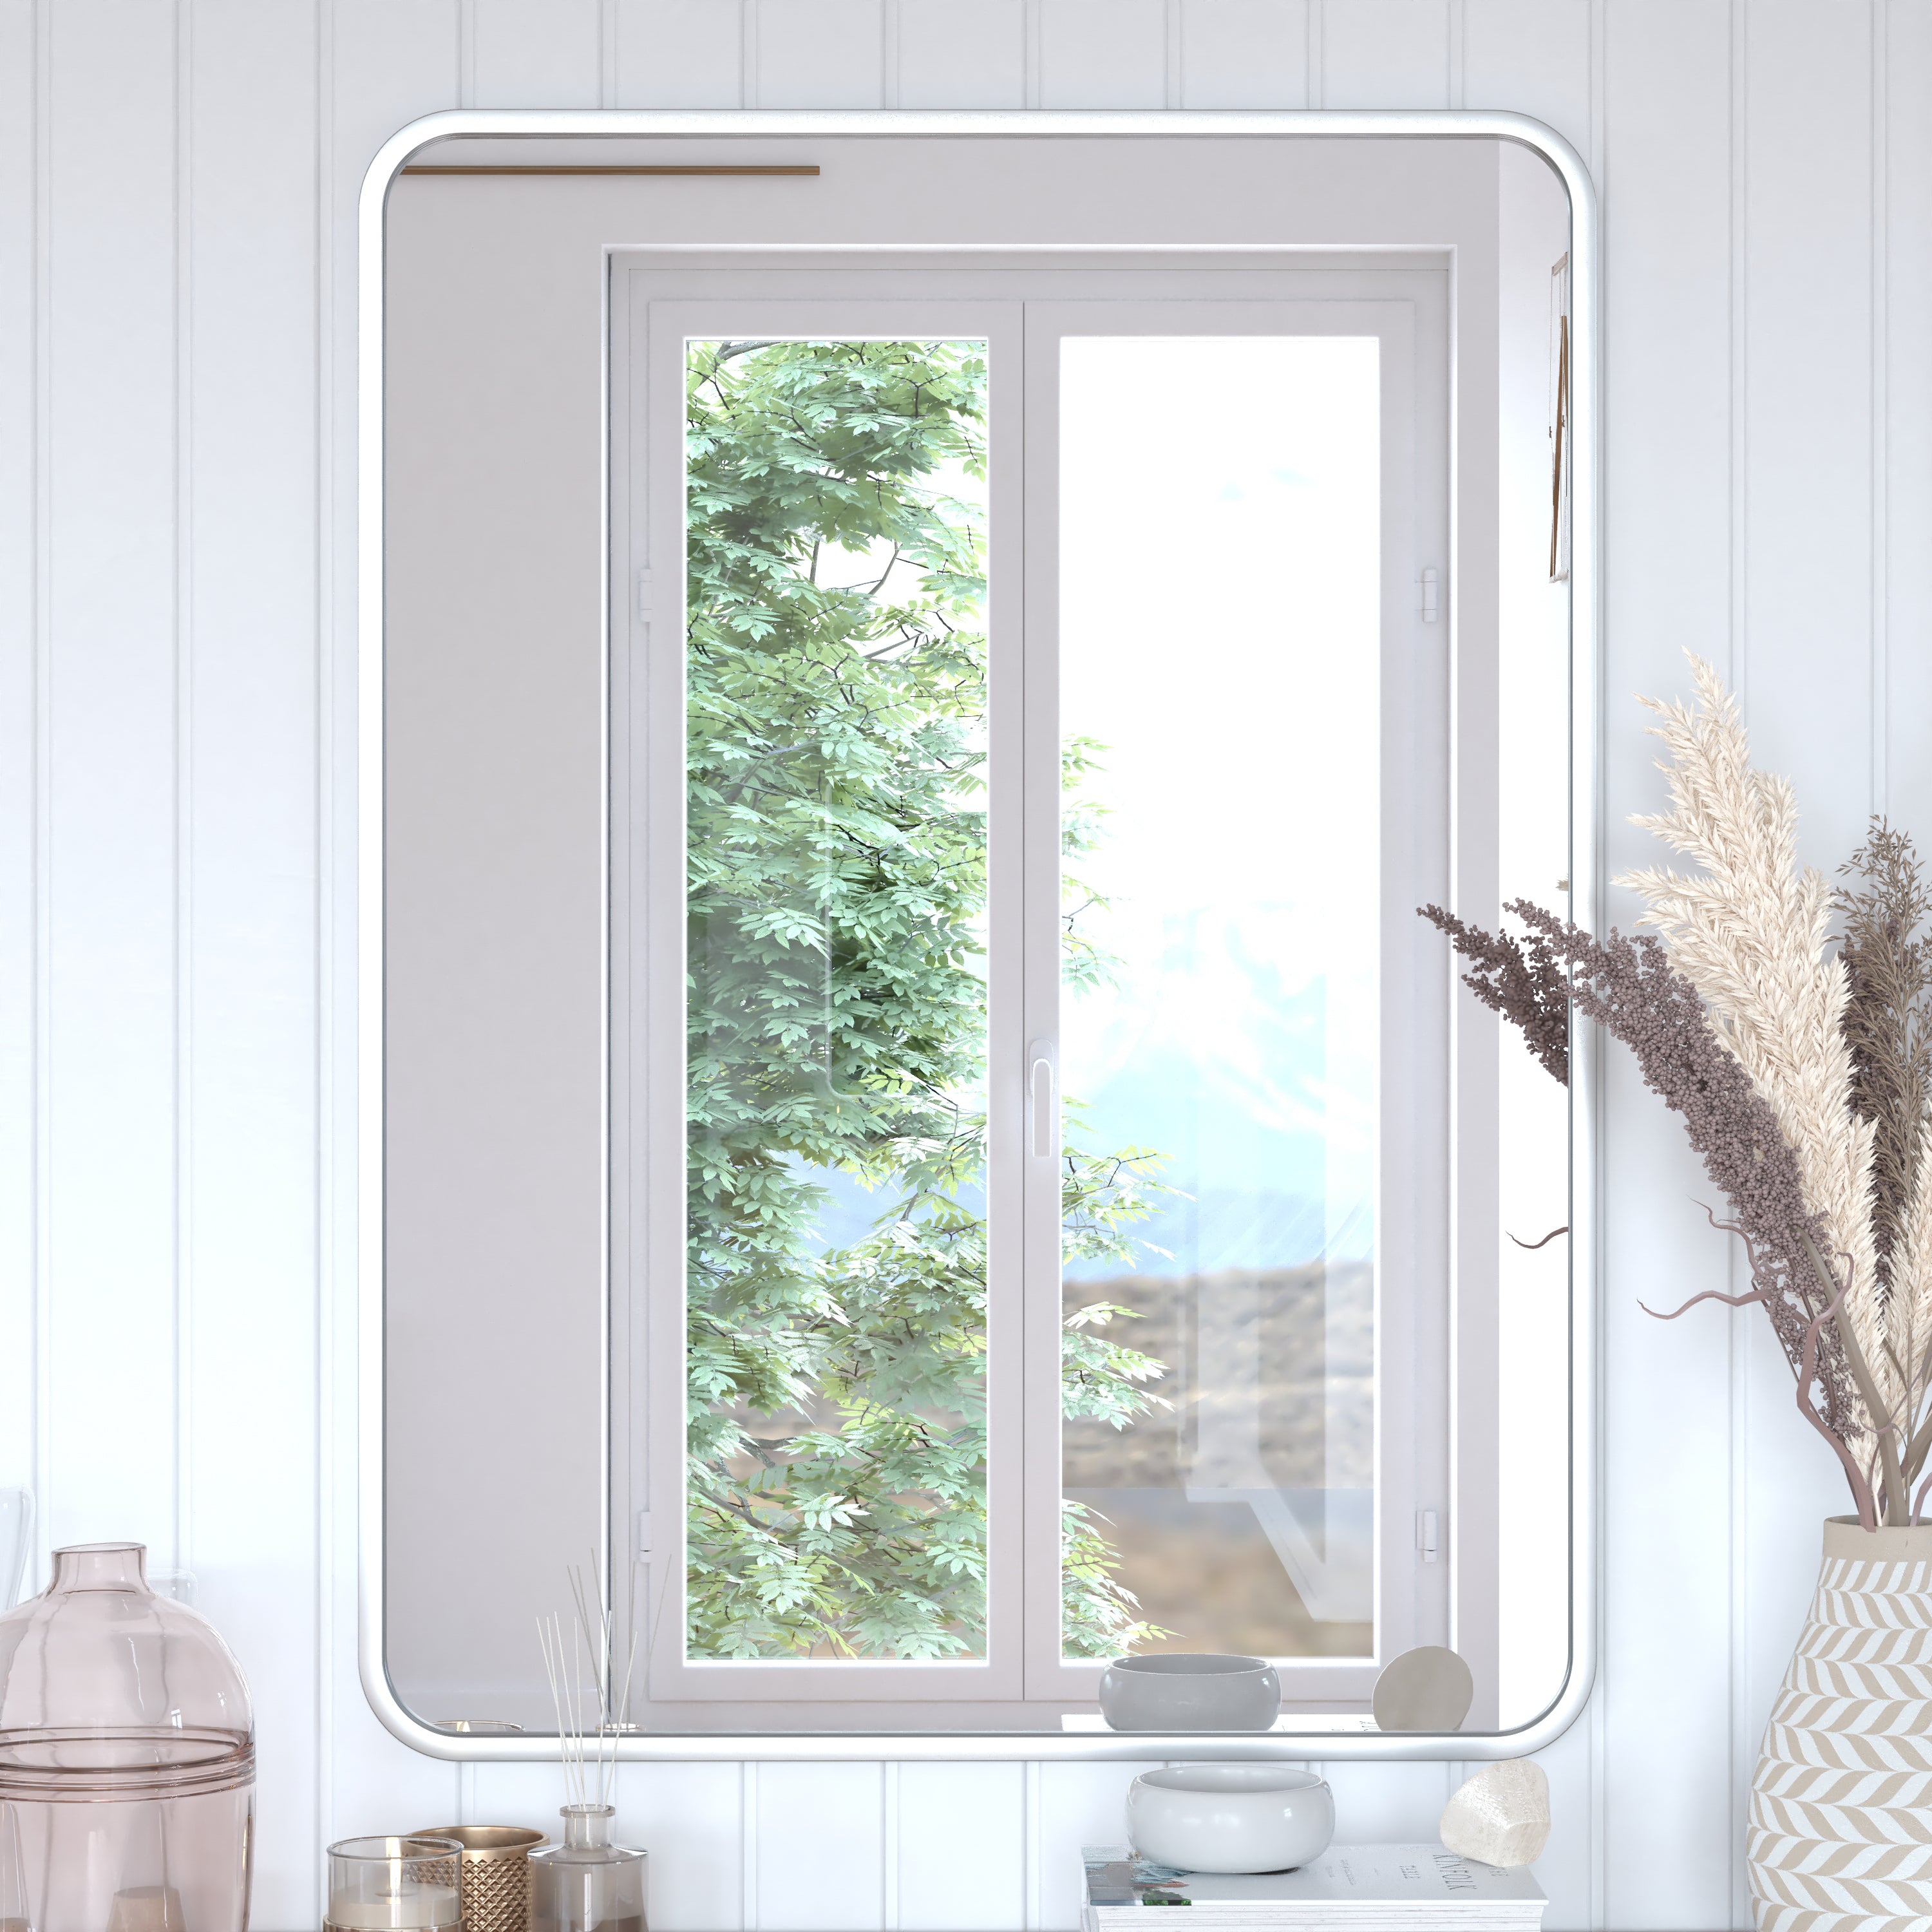 Jada Decorative Wall Mirror - Rounded Corners, Bathroom & Living Room Glass Mirror Hangs Horizontal Or Vertical-Mirror-Flash Furniture-Wall2Wall Furnishings